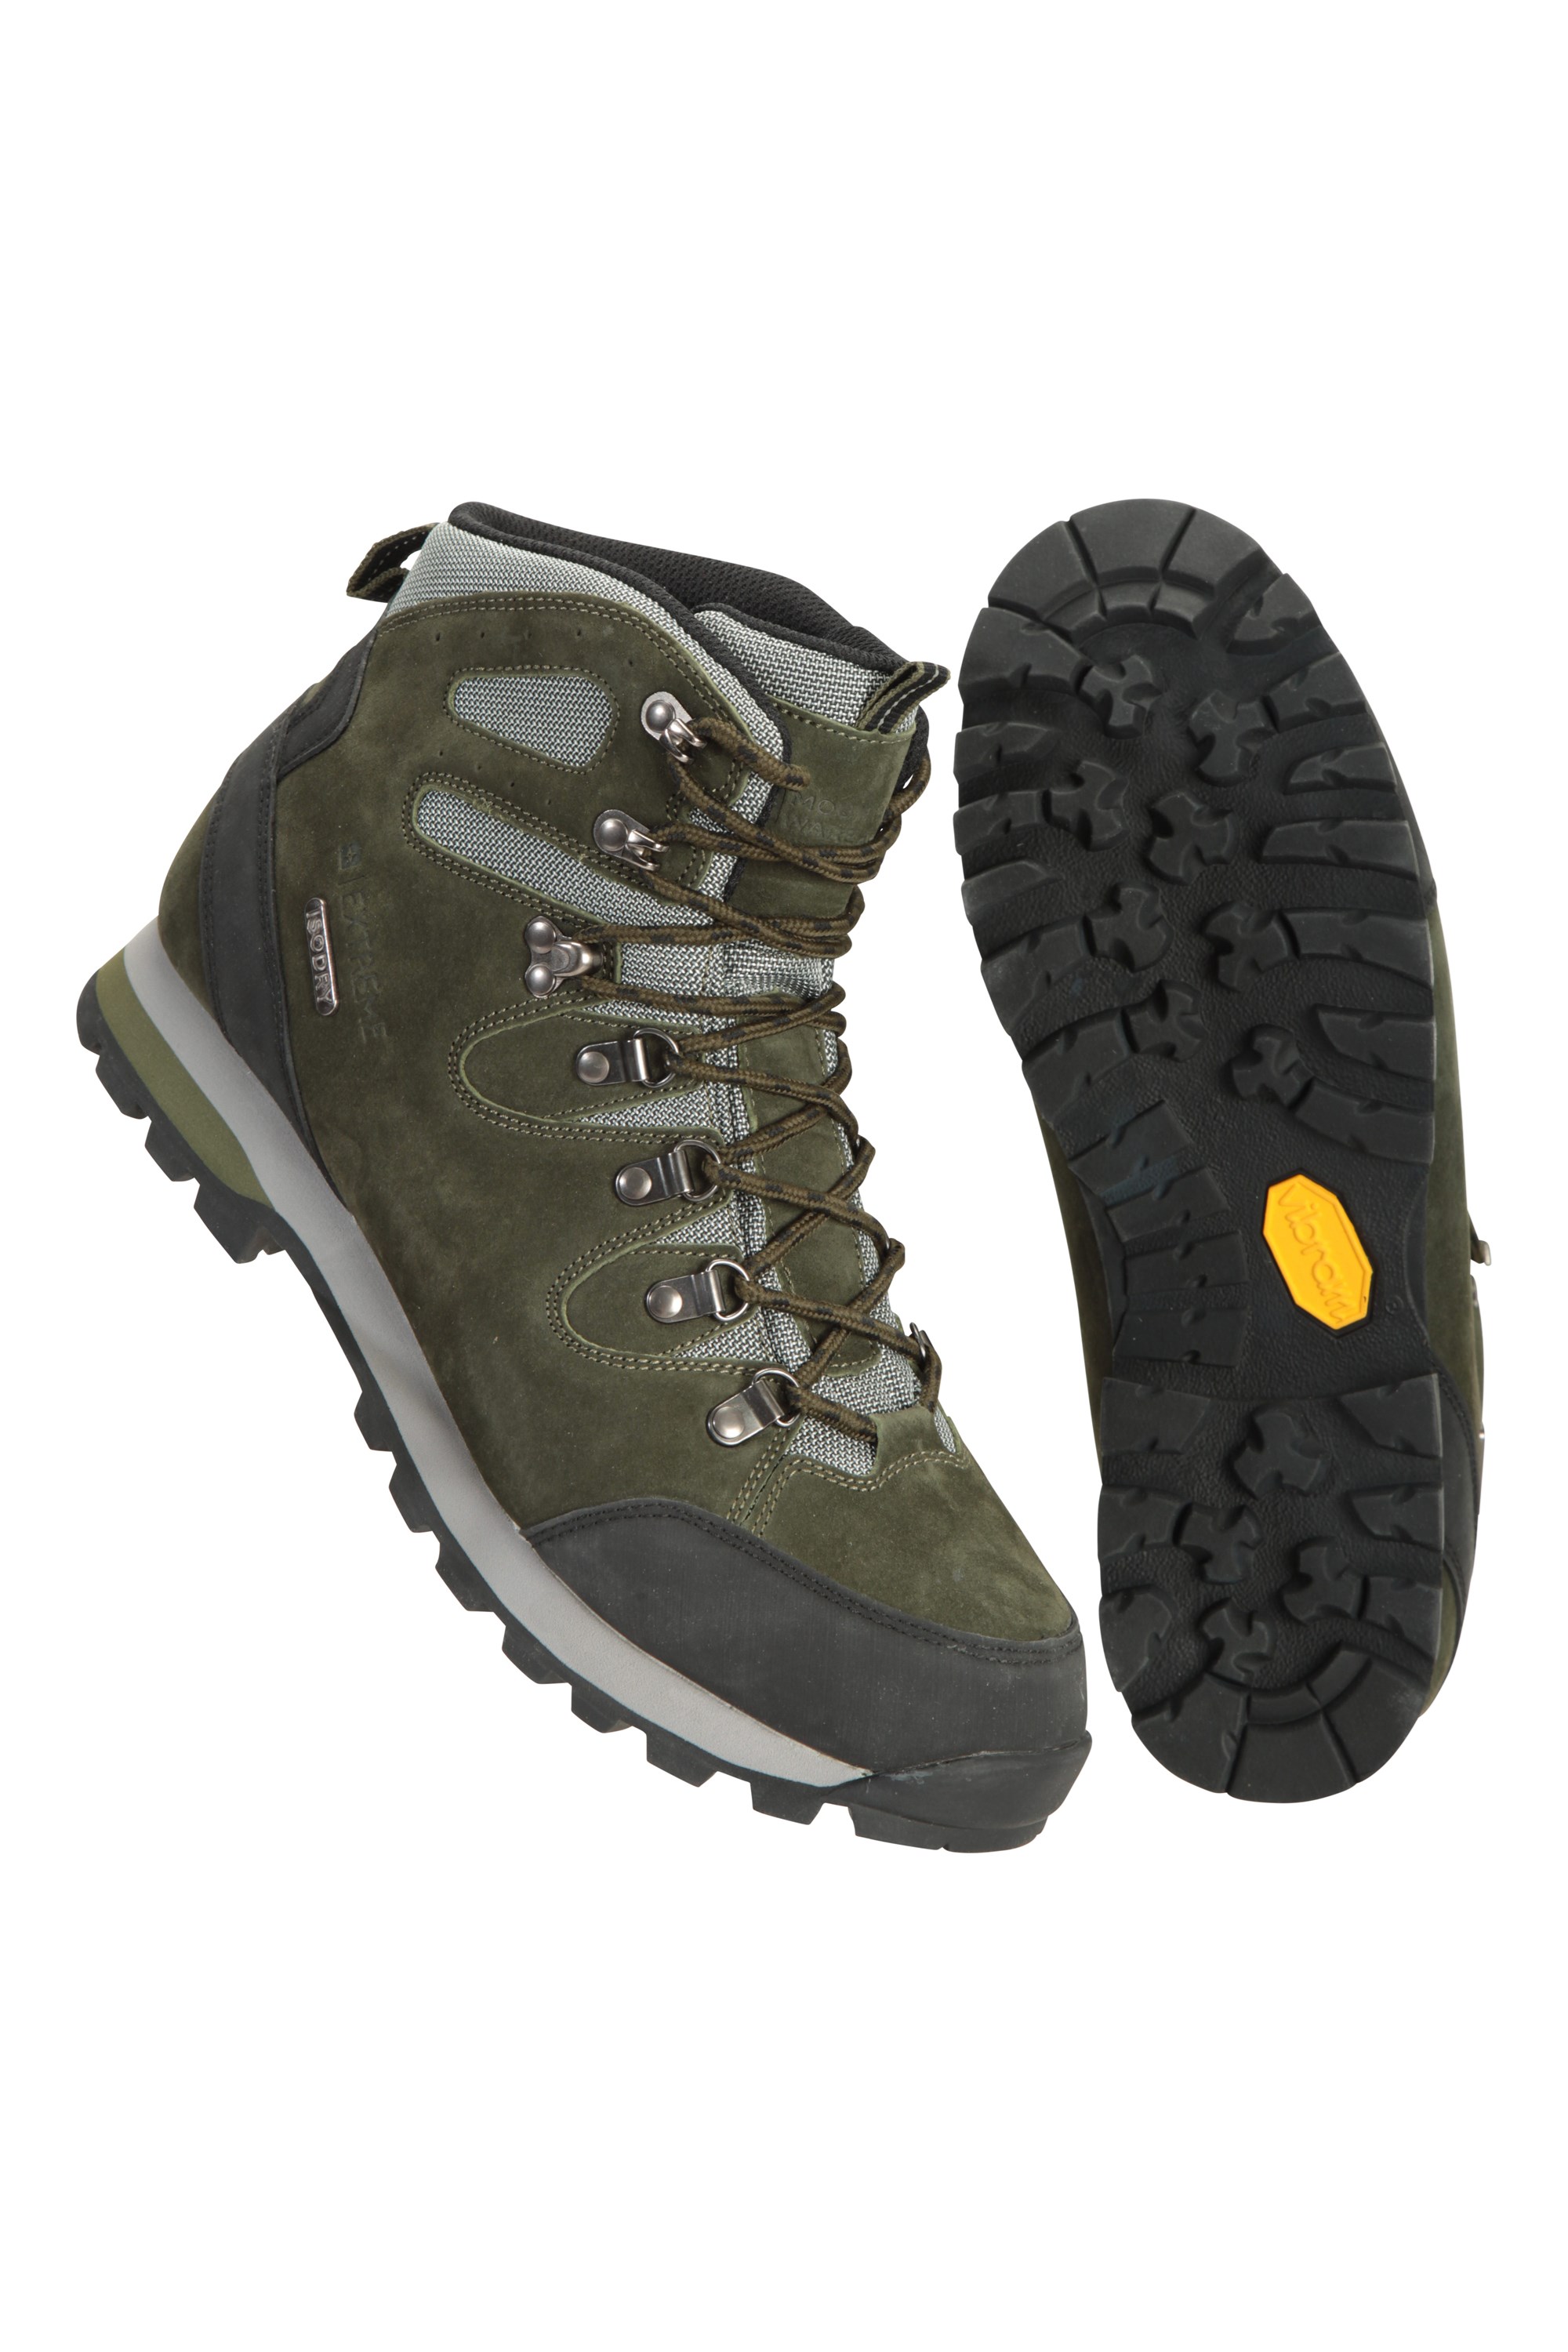 Mountain Warehouse Latitude Mens Vibram Waterproof Hiking Boots Brown 7 M US Men